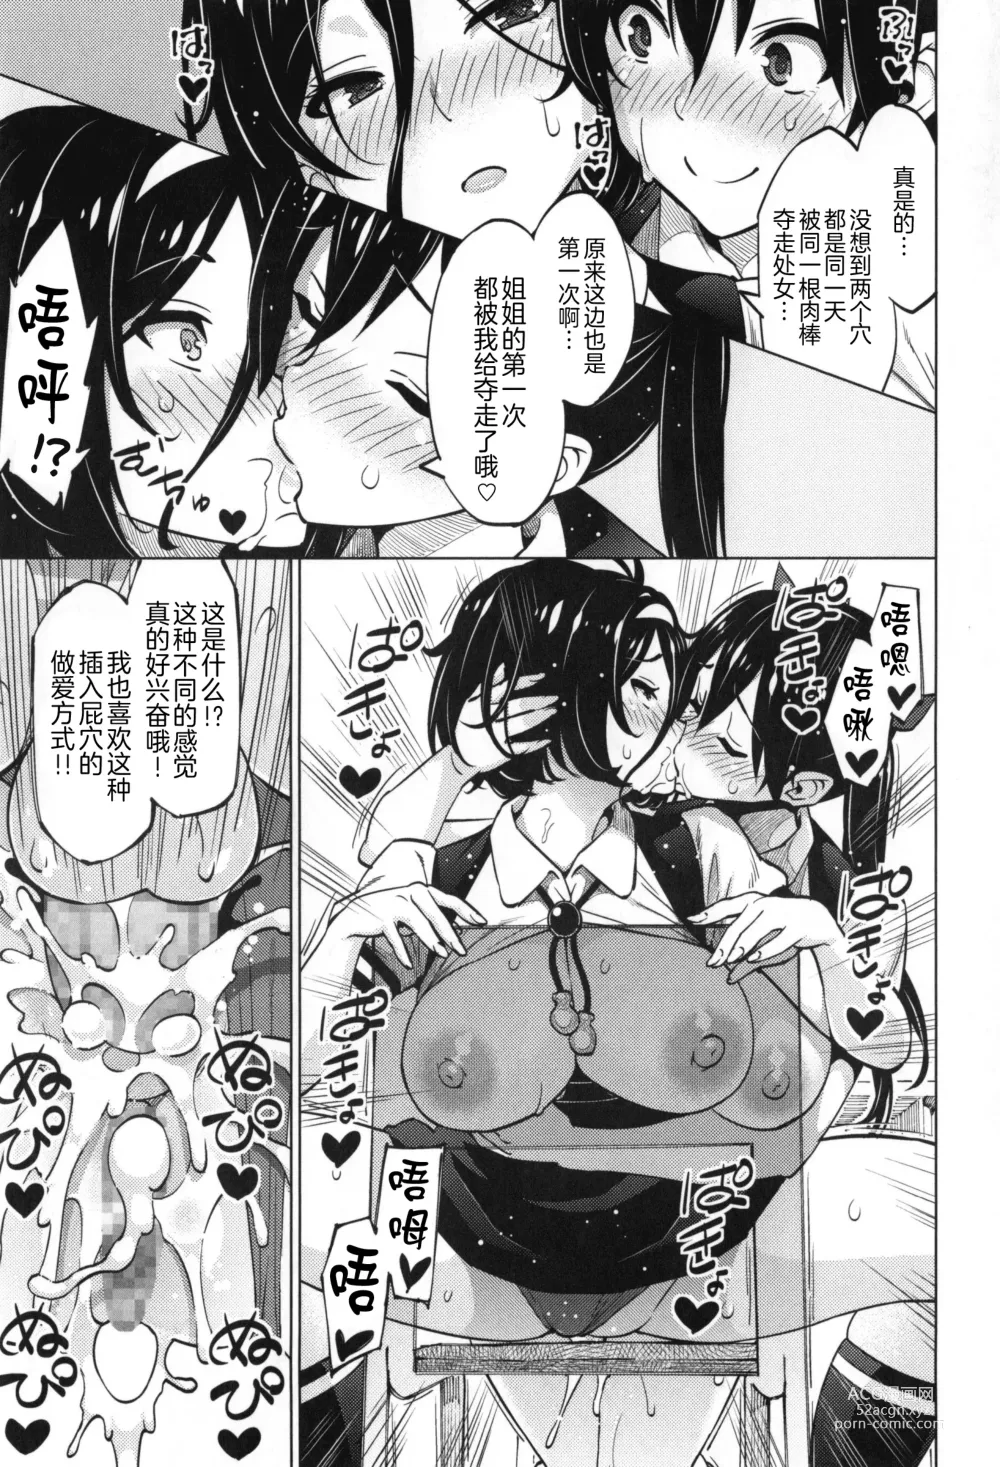 Page 210 of manga Photorare SEX & photograph